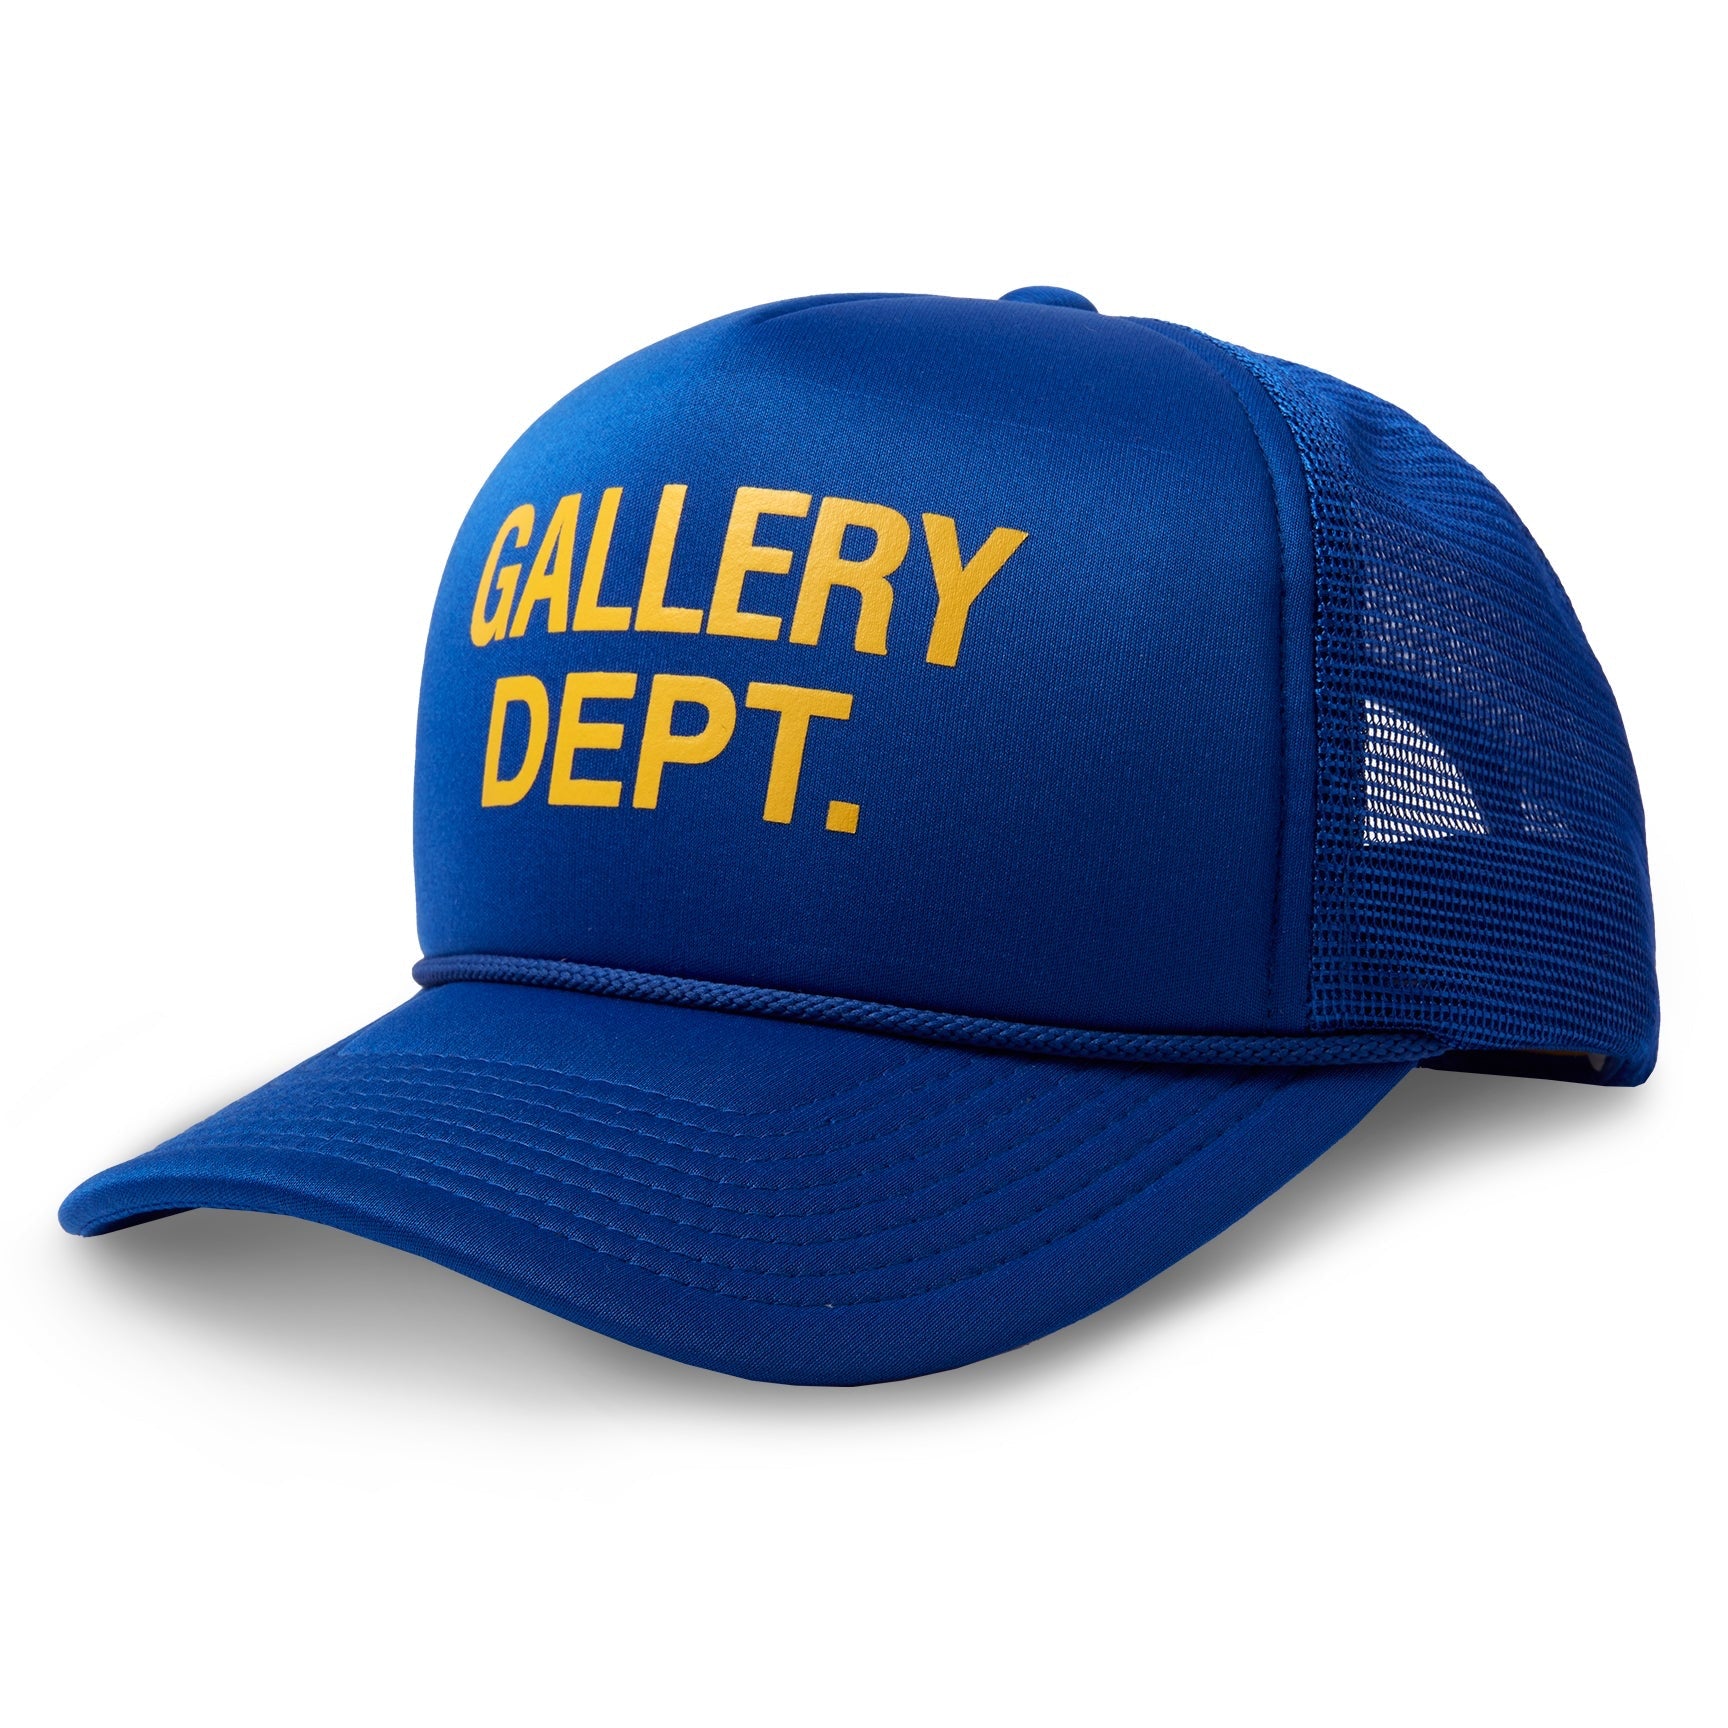 Gallery Dept Trucker Hat "Blue"